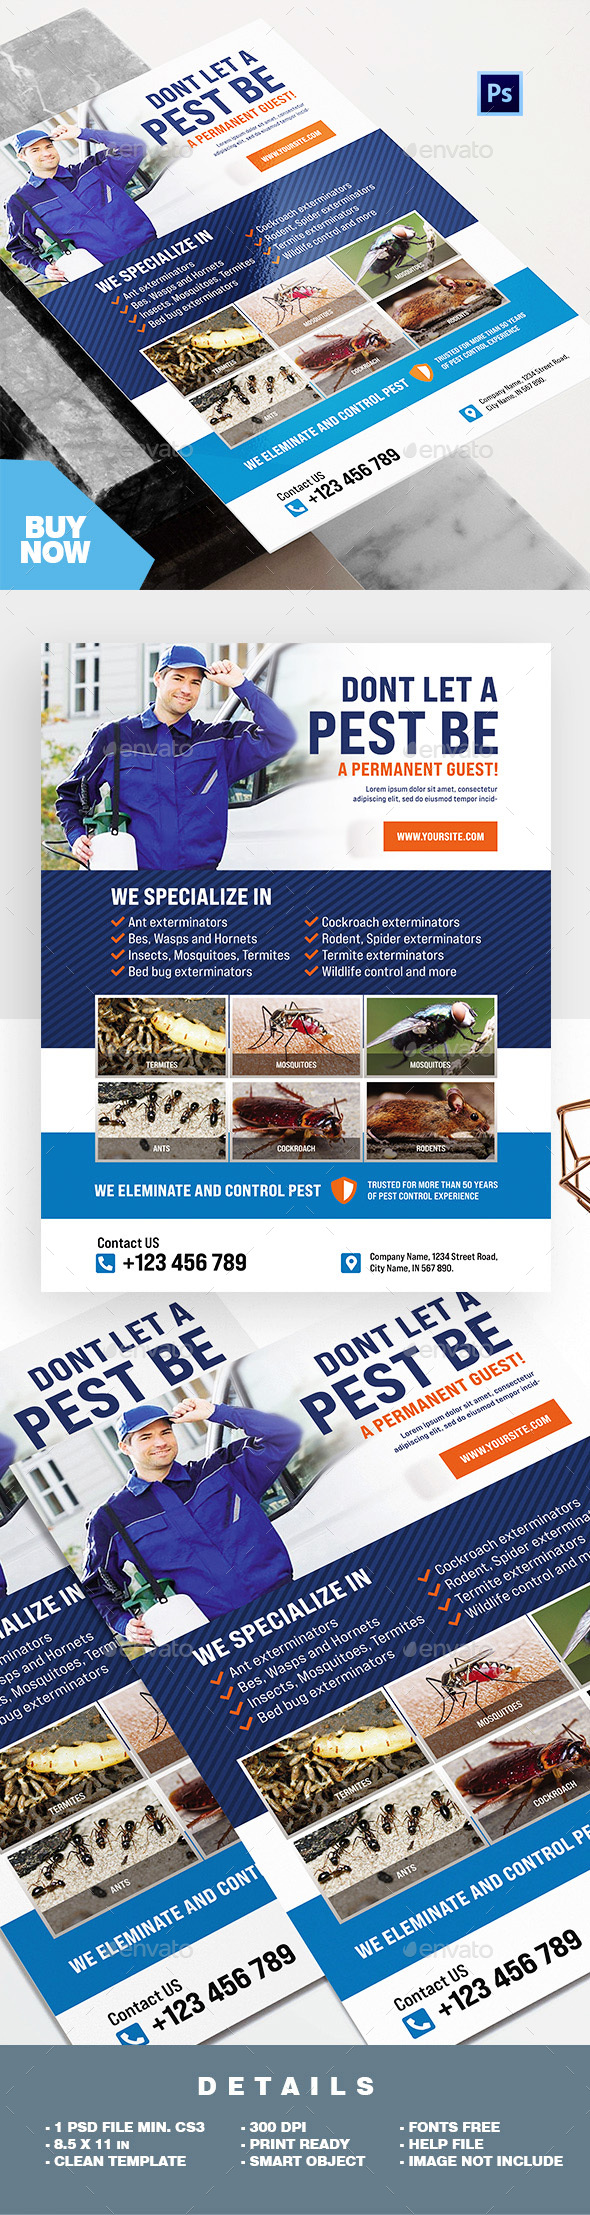 Professional Pest Control Services Flyer